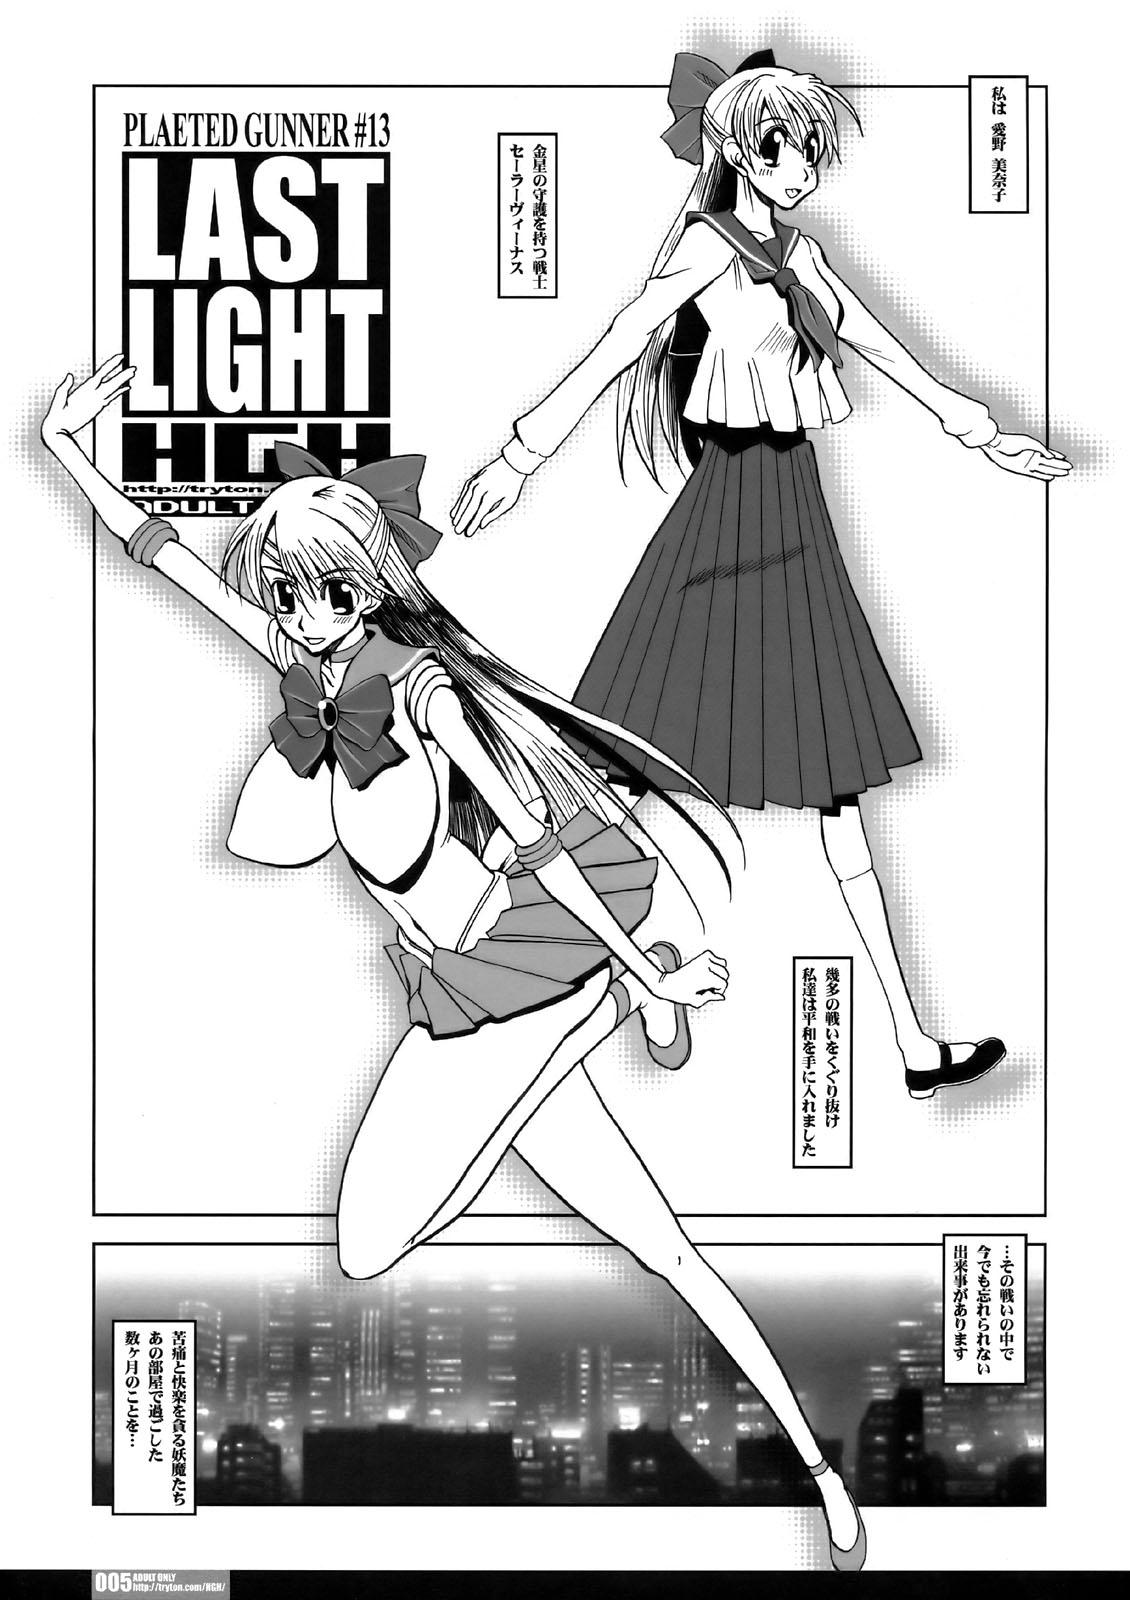 Cocksucking HGH - Last Light - Sailor moon Female Orgasm - Page 5